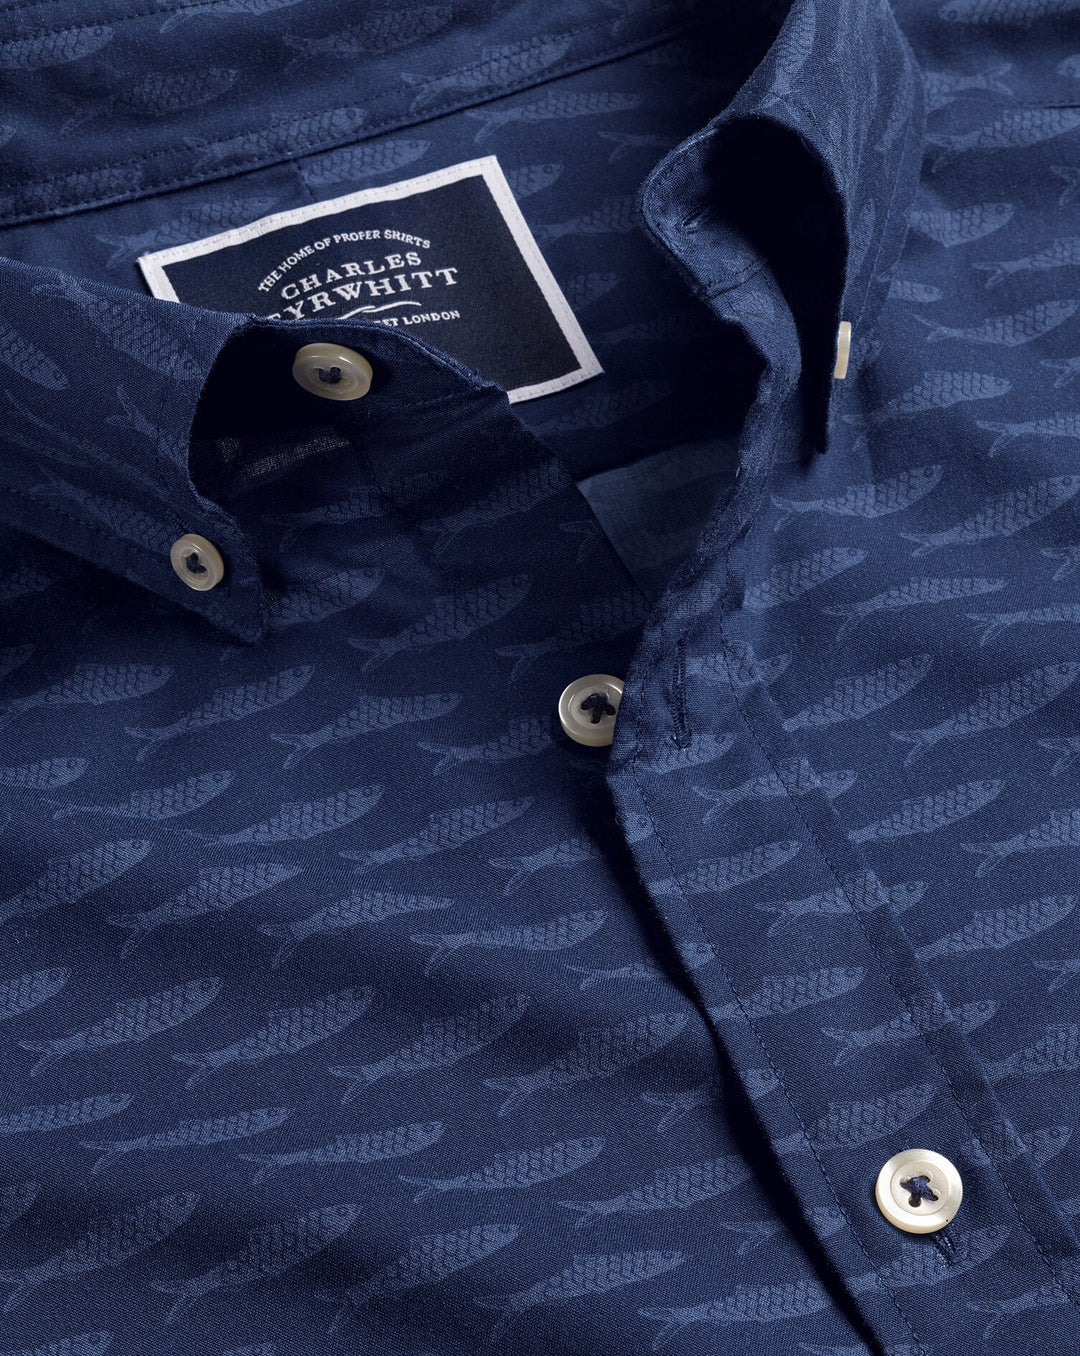 Charles Tyrwhitt Navy Blue Fish Print Slim Fit Ss Non-Iron Stretch Poplin Shirt